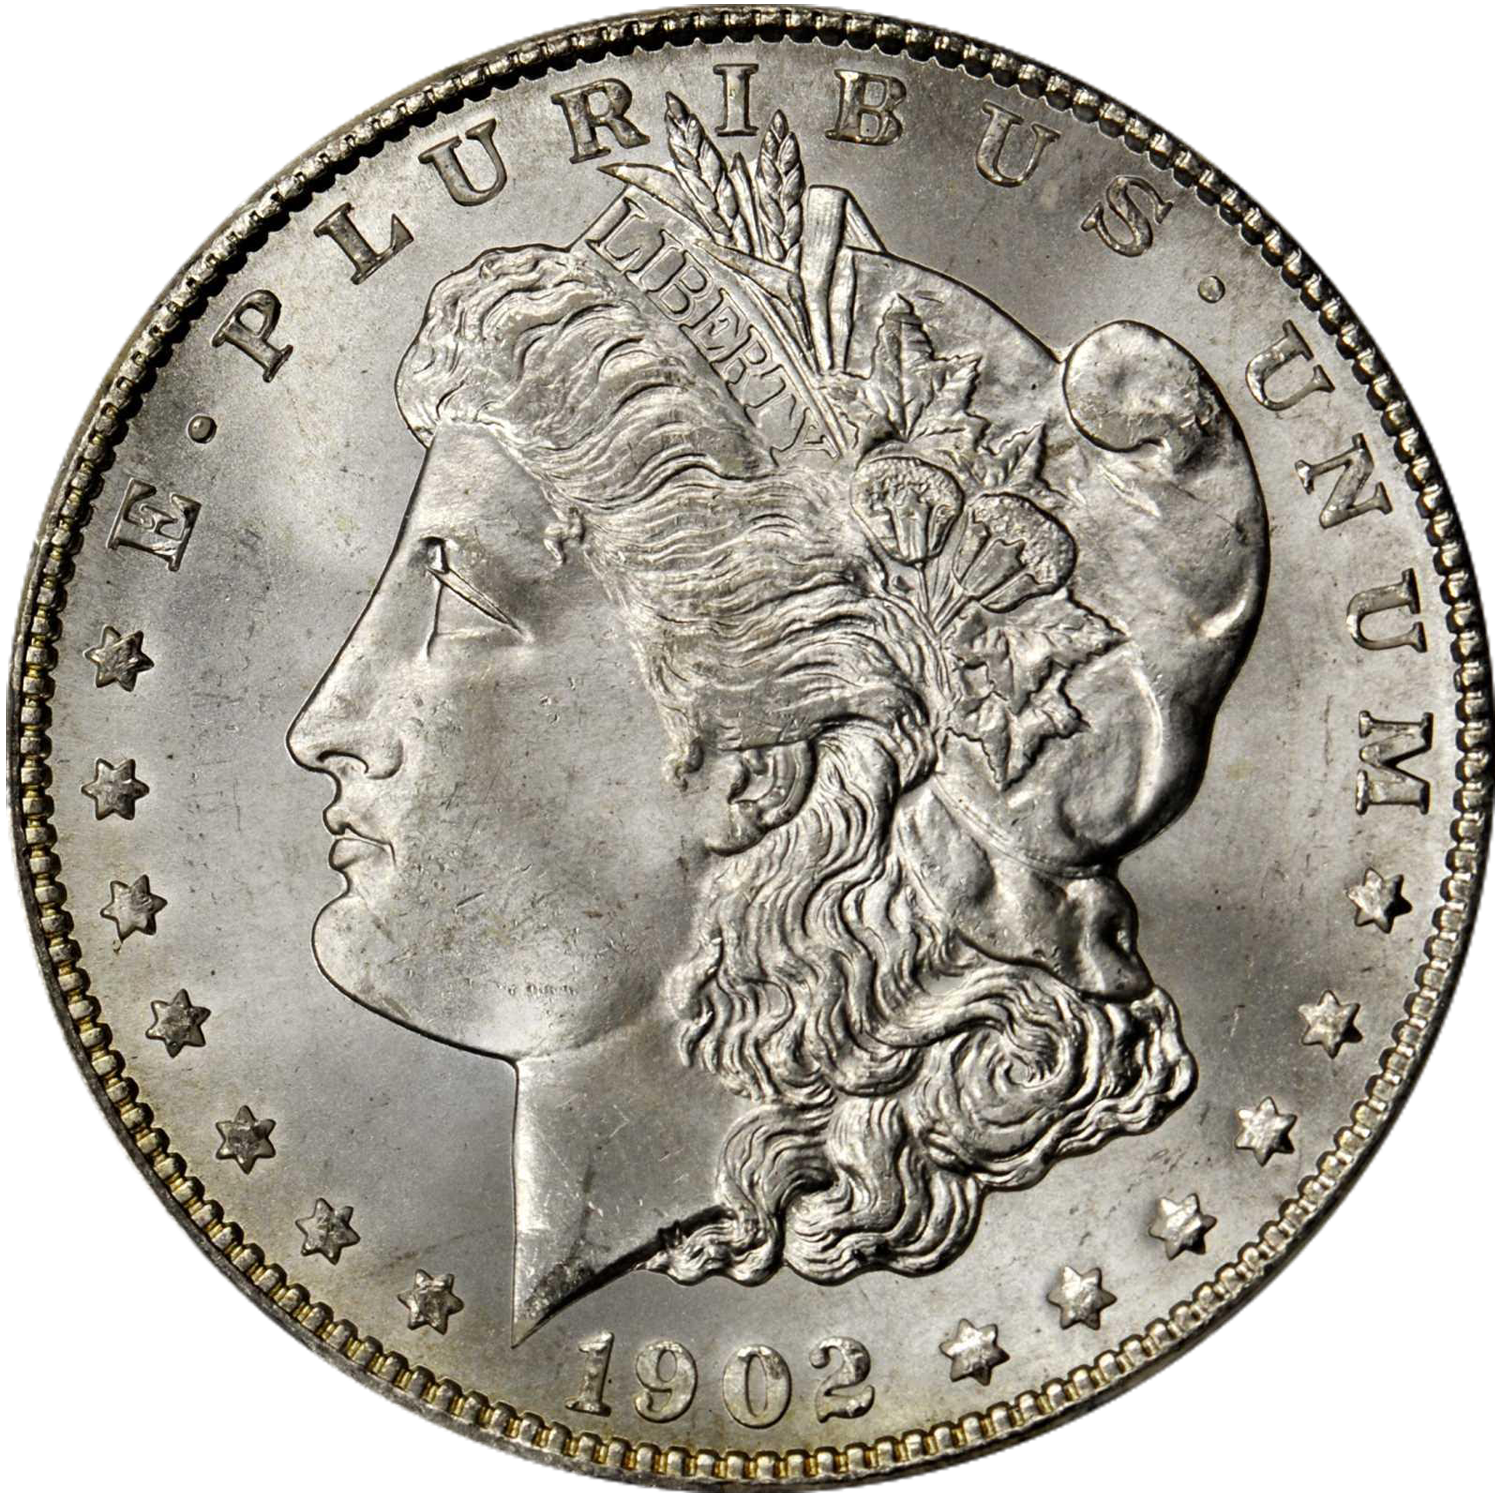 1902 o mint morgan dollar price guide value